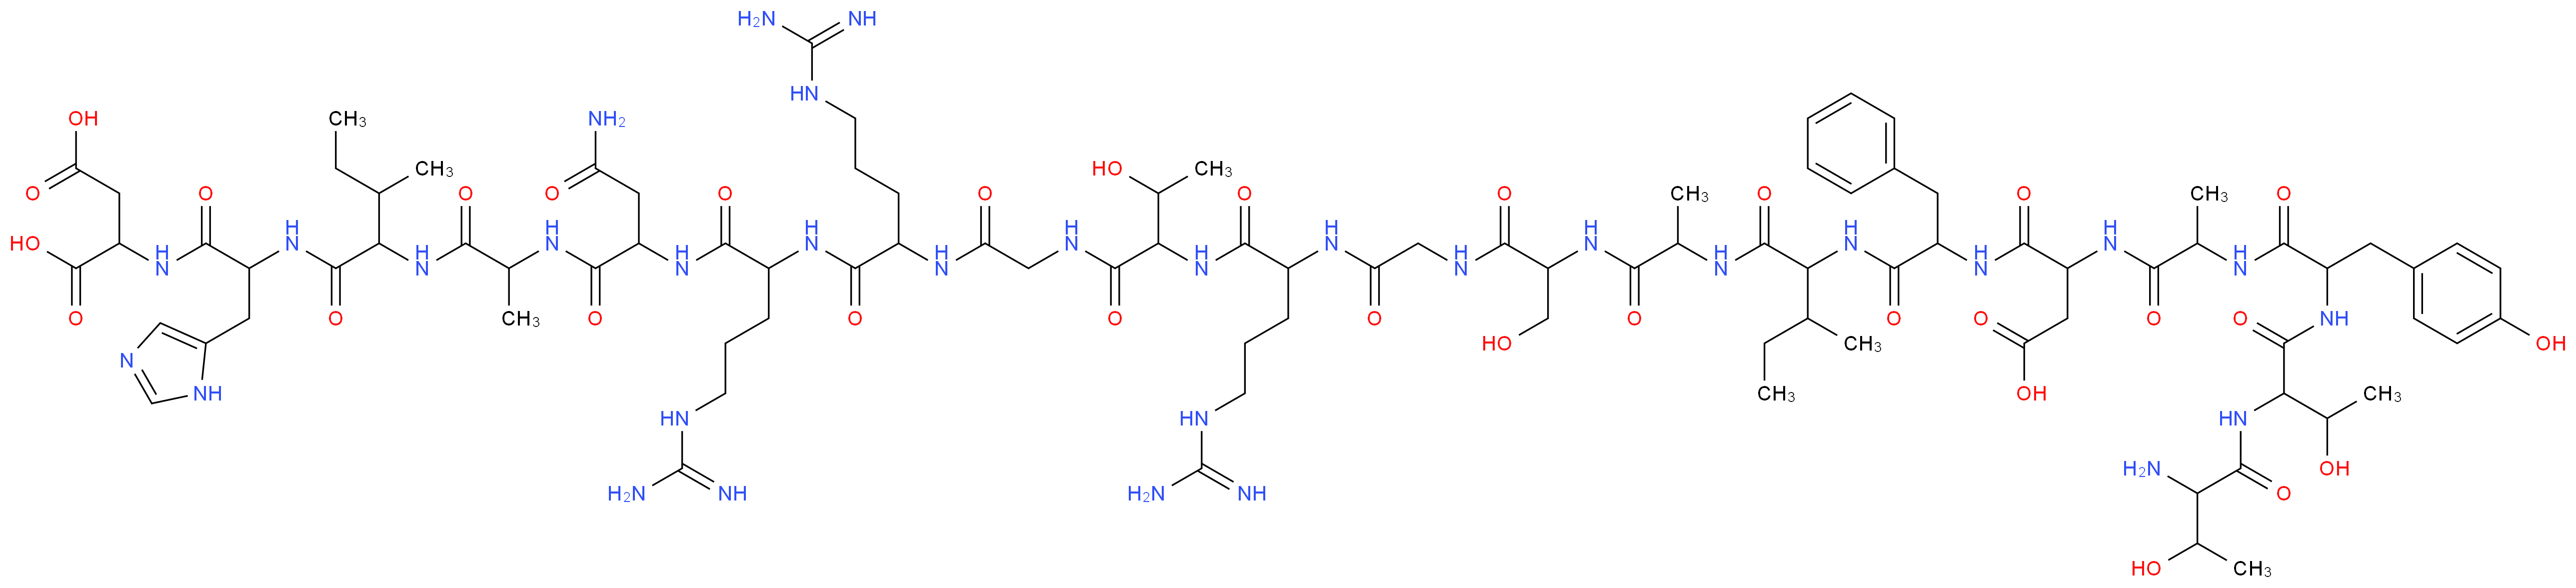 2-(2-{2-[2-(2-{2-[2-(2-{2-[2-(2-{2-[2-(2-{2-[2-(2-{2-[2-(2-amino-3-hydroxybutanamido)-3-hydroxybutanamido]-3-(4-hydroxyphenyl)propanamido}propanamido)-3-carboxypropanamido]-3-phenylpropanamido}-3-methylpentanamido)propanamido]-3-hydroxypropanamido}acetamido)-5-carbamimidamidopentanamido]-3-hydroxybutanamido}acetamido)-5-carbamimidamidopentanamido]-5-carbamimidamidopentanamido}-3-carbamoylpropanamido)propanamido]-3-methylpentanamido}-3-(1H-imidazol-5-yl)propanamido)butanedioic acid_分子结构_CAS_99534-03-9